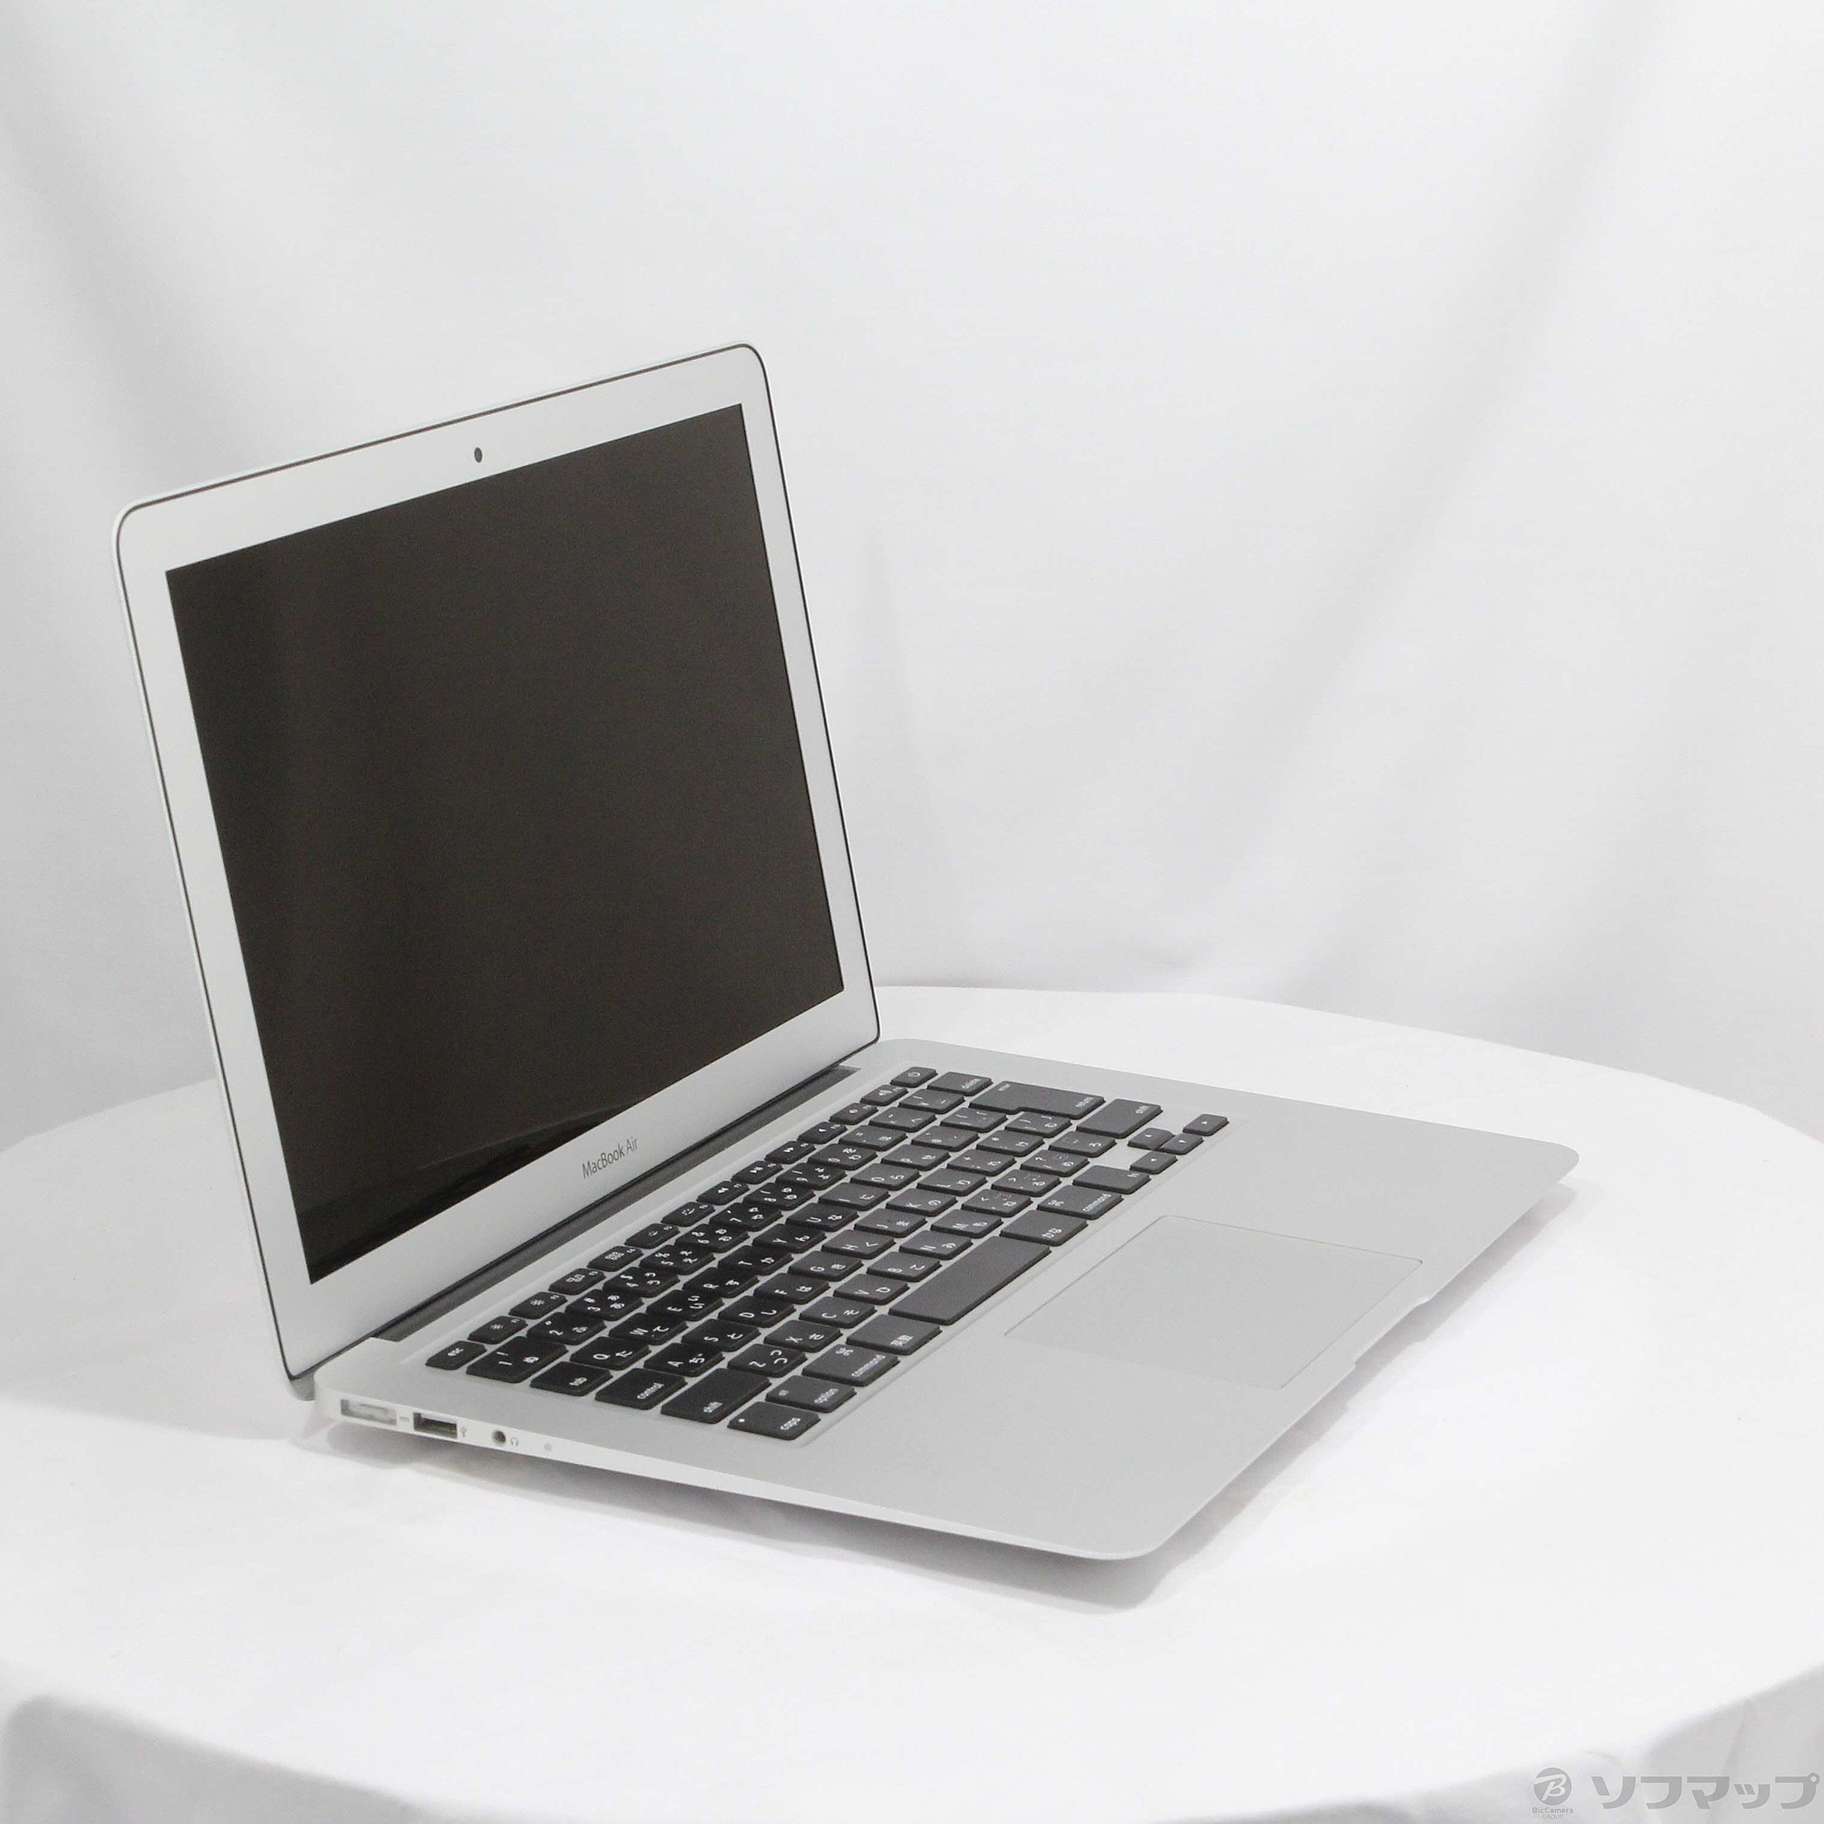 中古】MacBook Air 13.3-inch Mid 2012 MD231J／A Core_i5 1.8GHz 4GB 